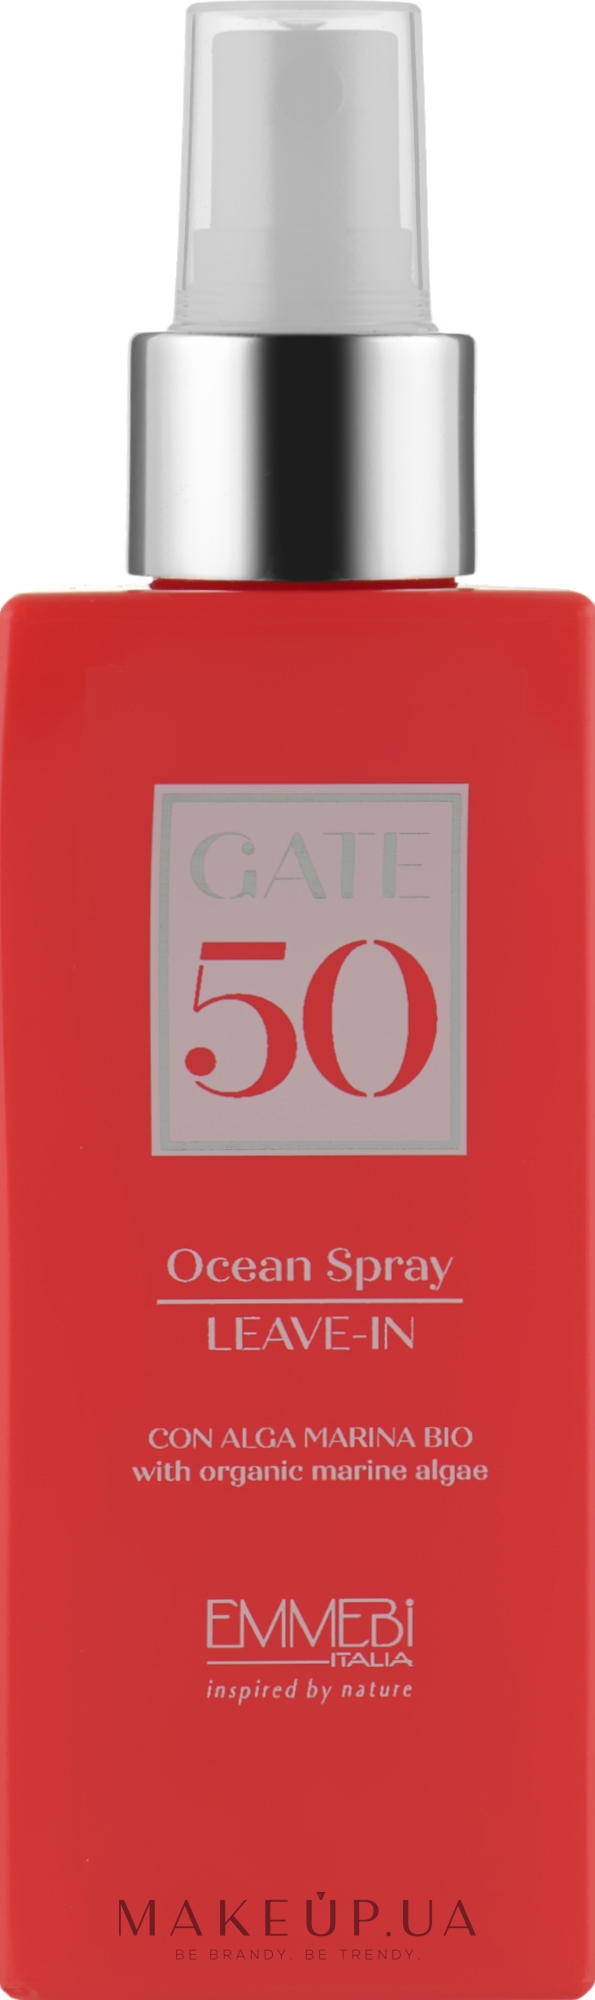 Несмываемый спрей для волос - Emmebi Italia Gate 50 Wash Ocean Spray Leave-In — фото 125ml